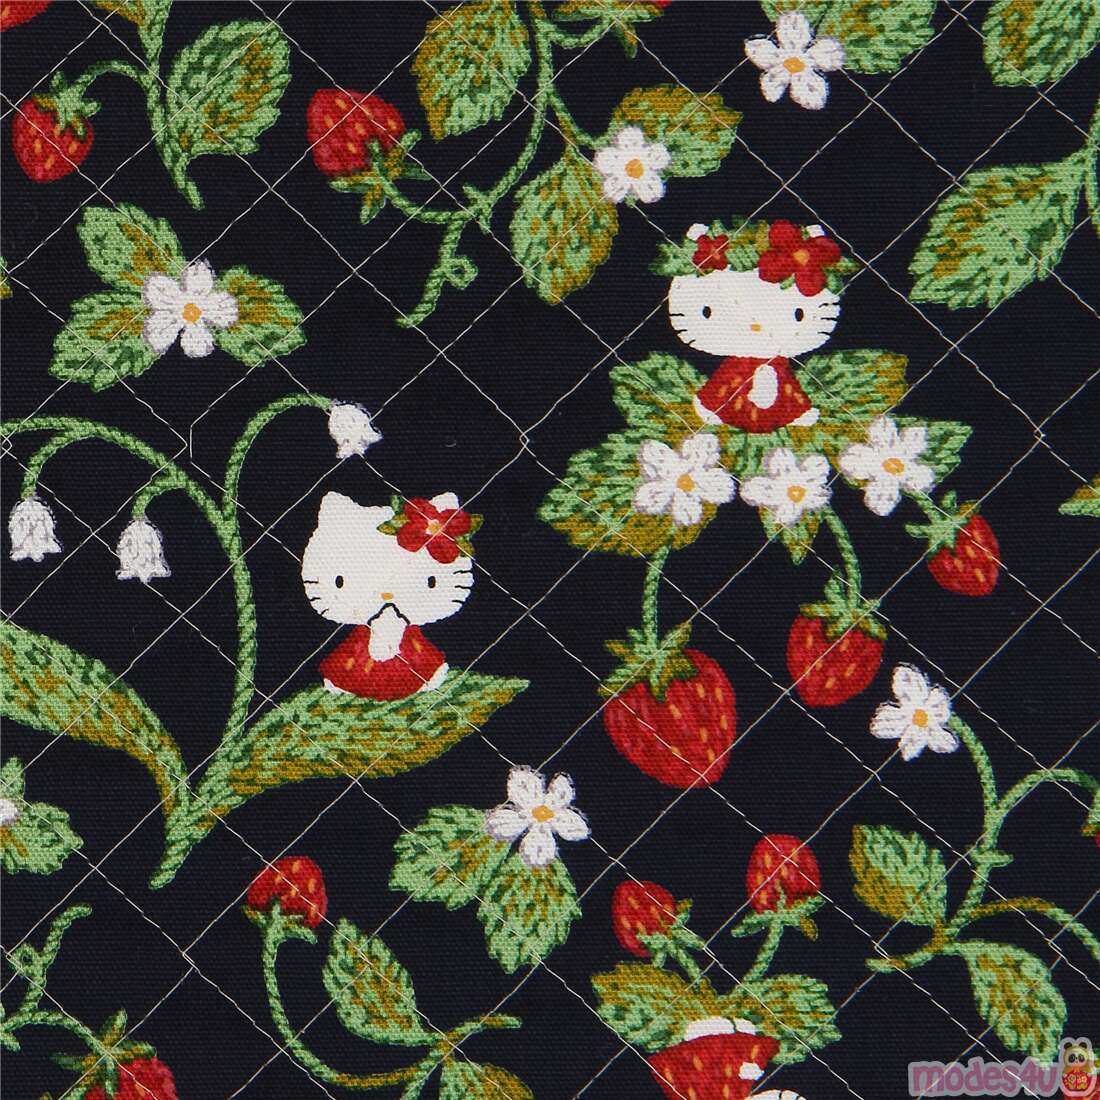 Strawberry fabric, strawberries fabric, Cranston print